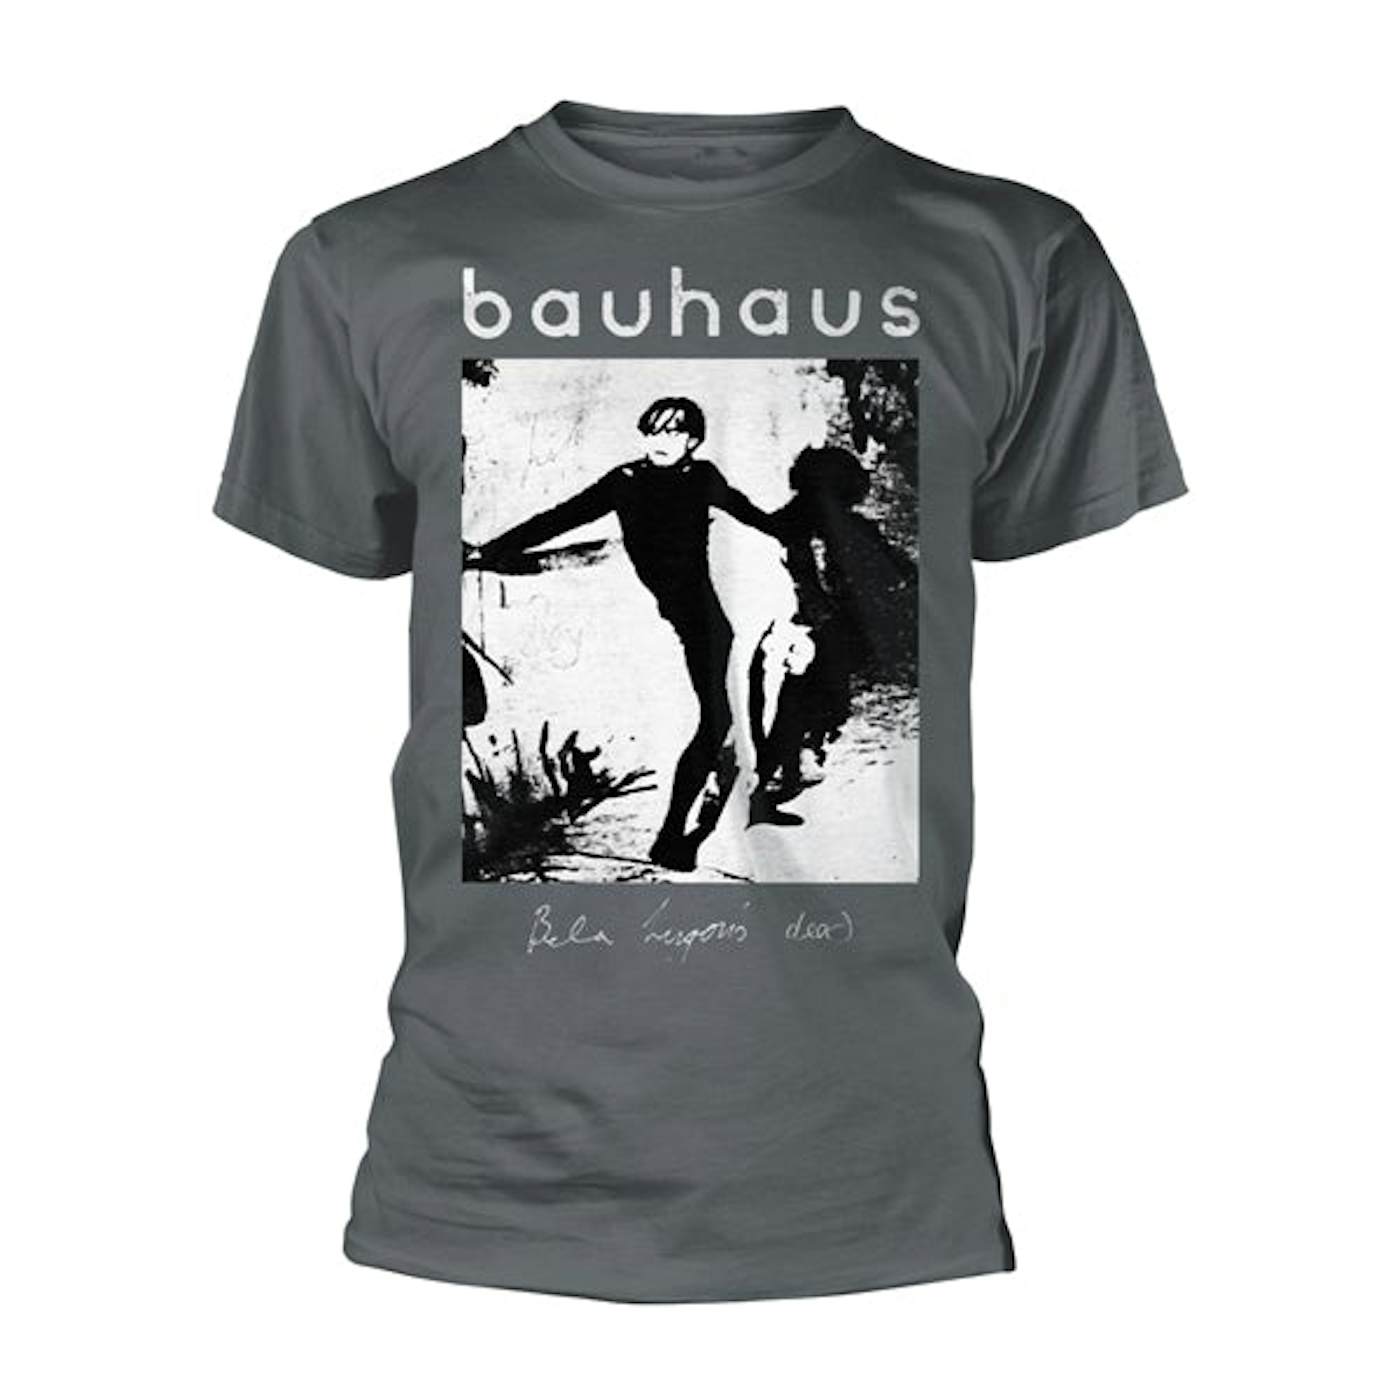 Bauhaus T-Shirt - Bela Lugosi's Dead (Charcoal)